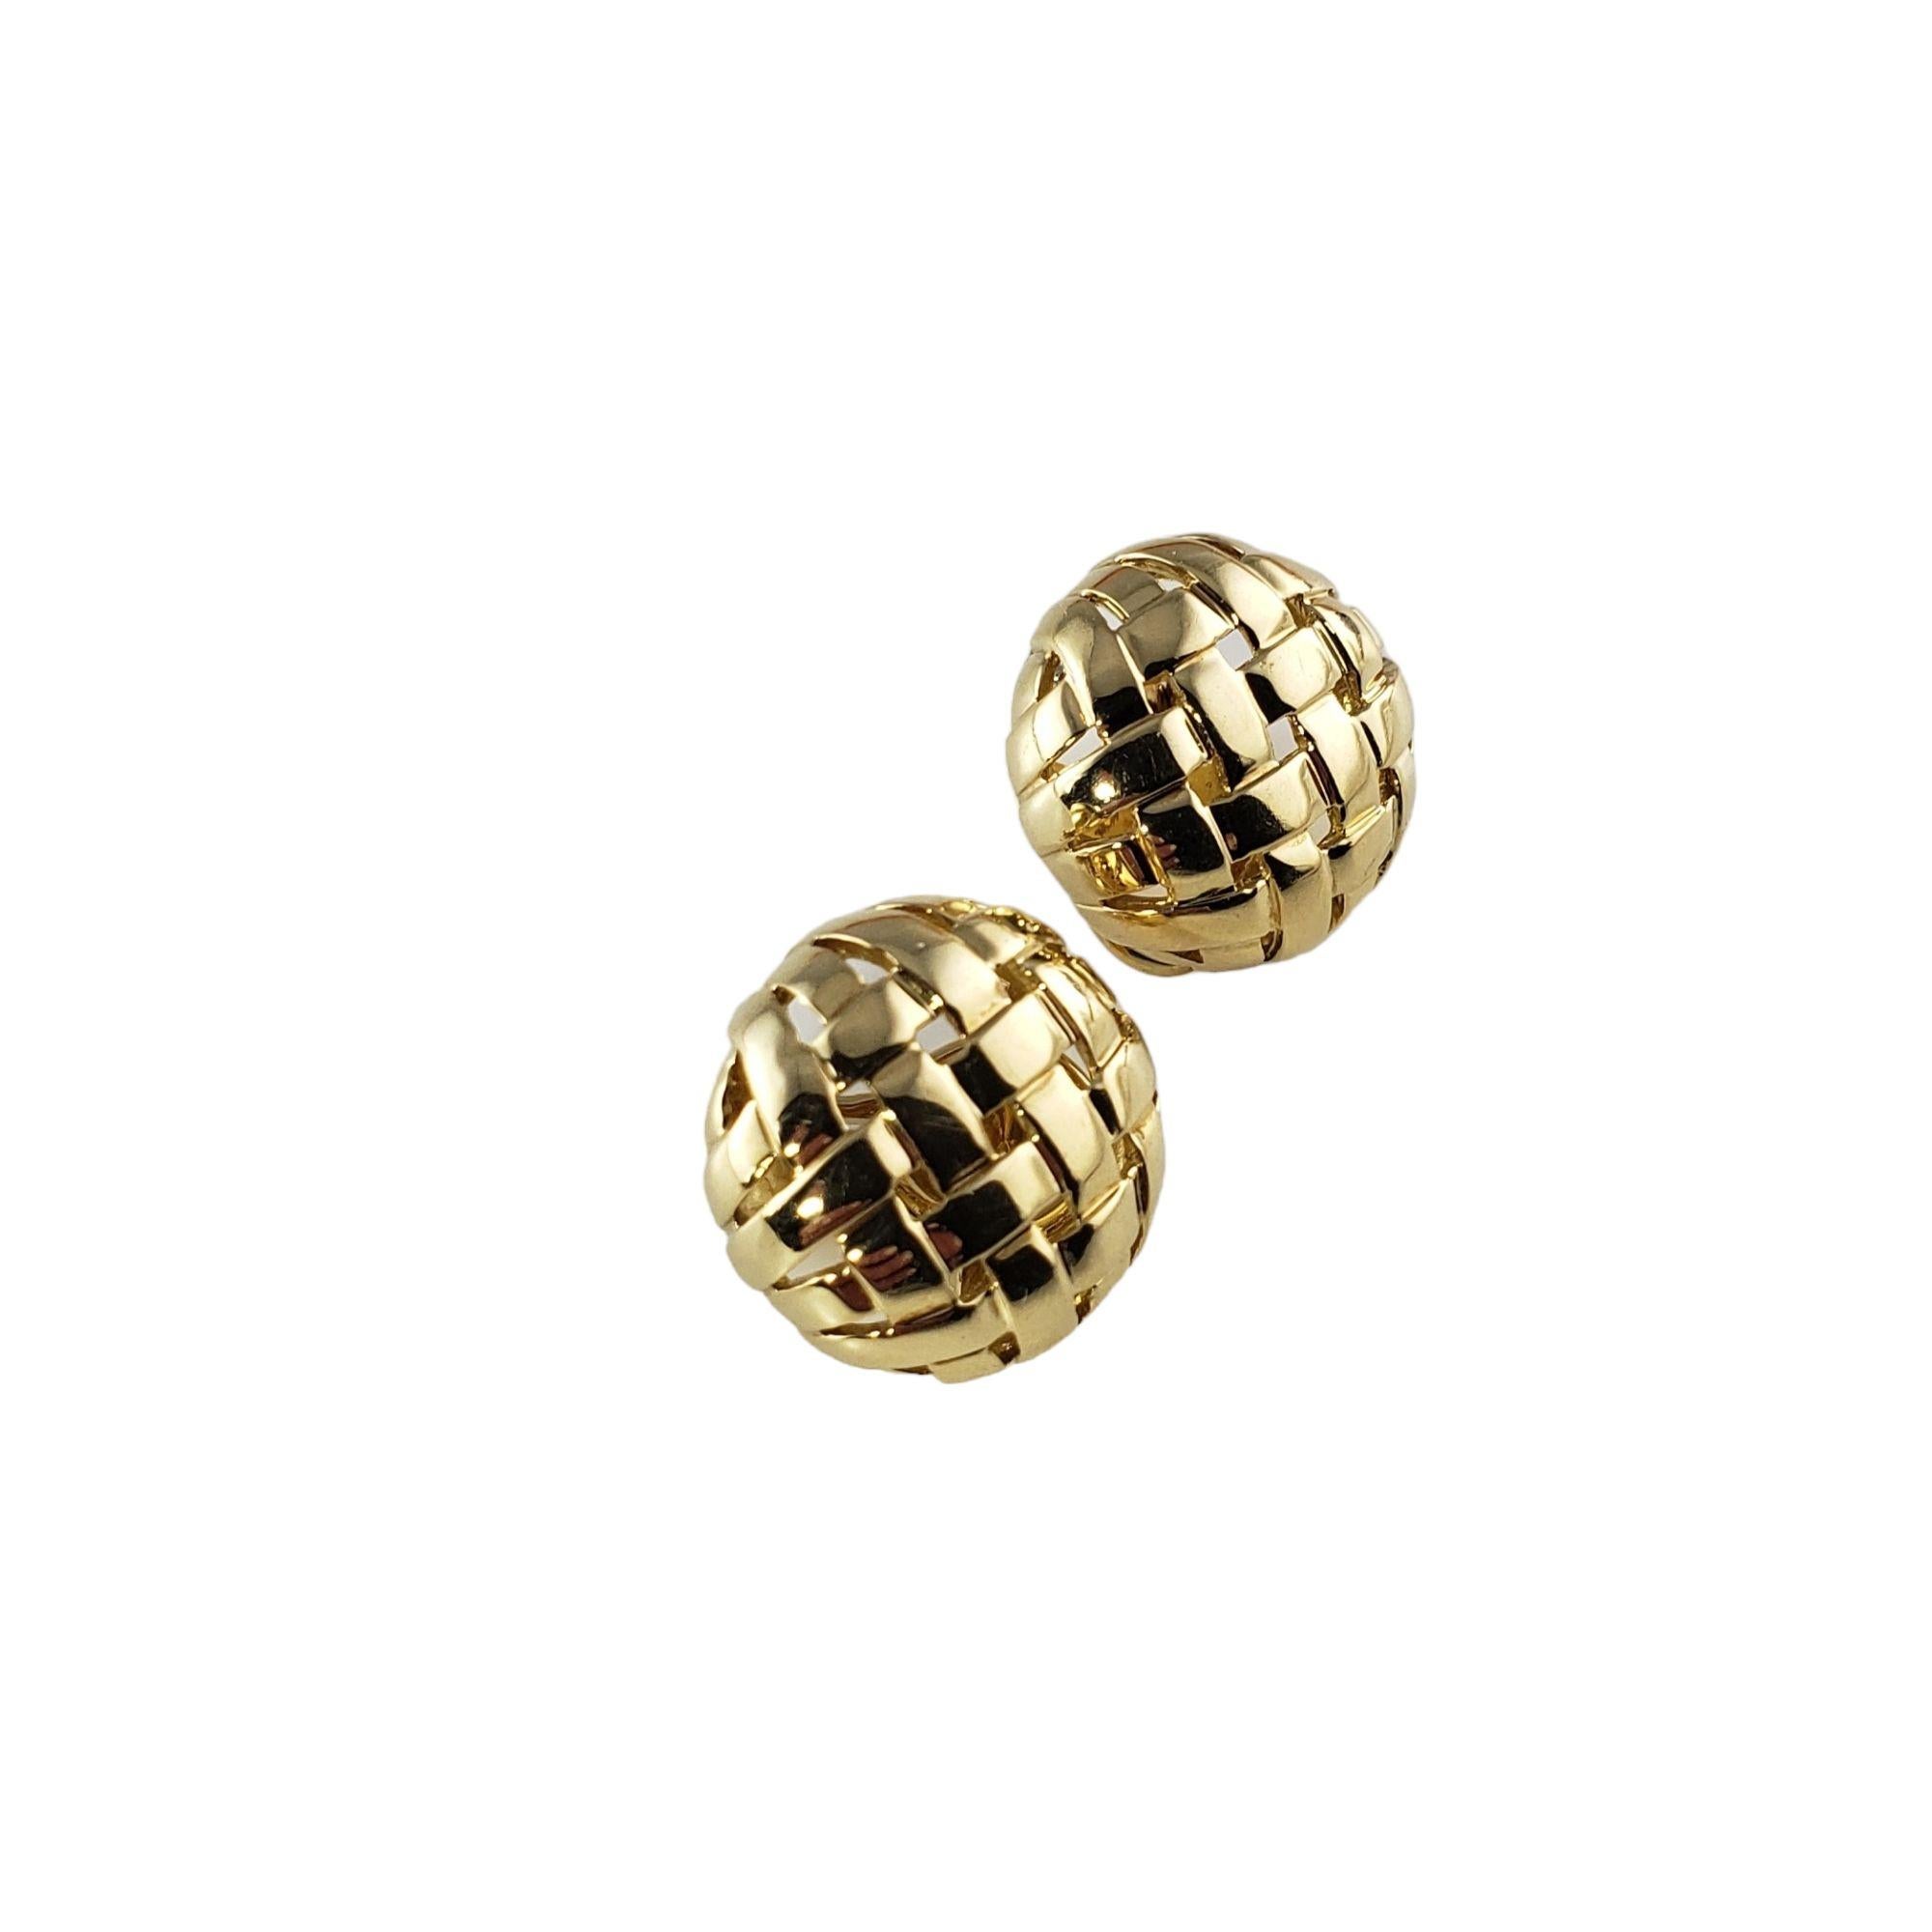 disco ball clip on earrings